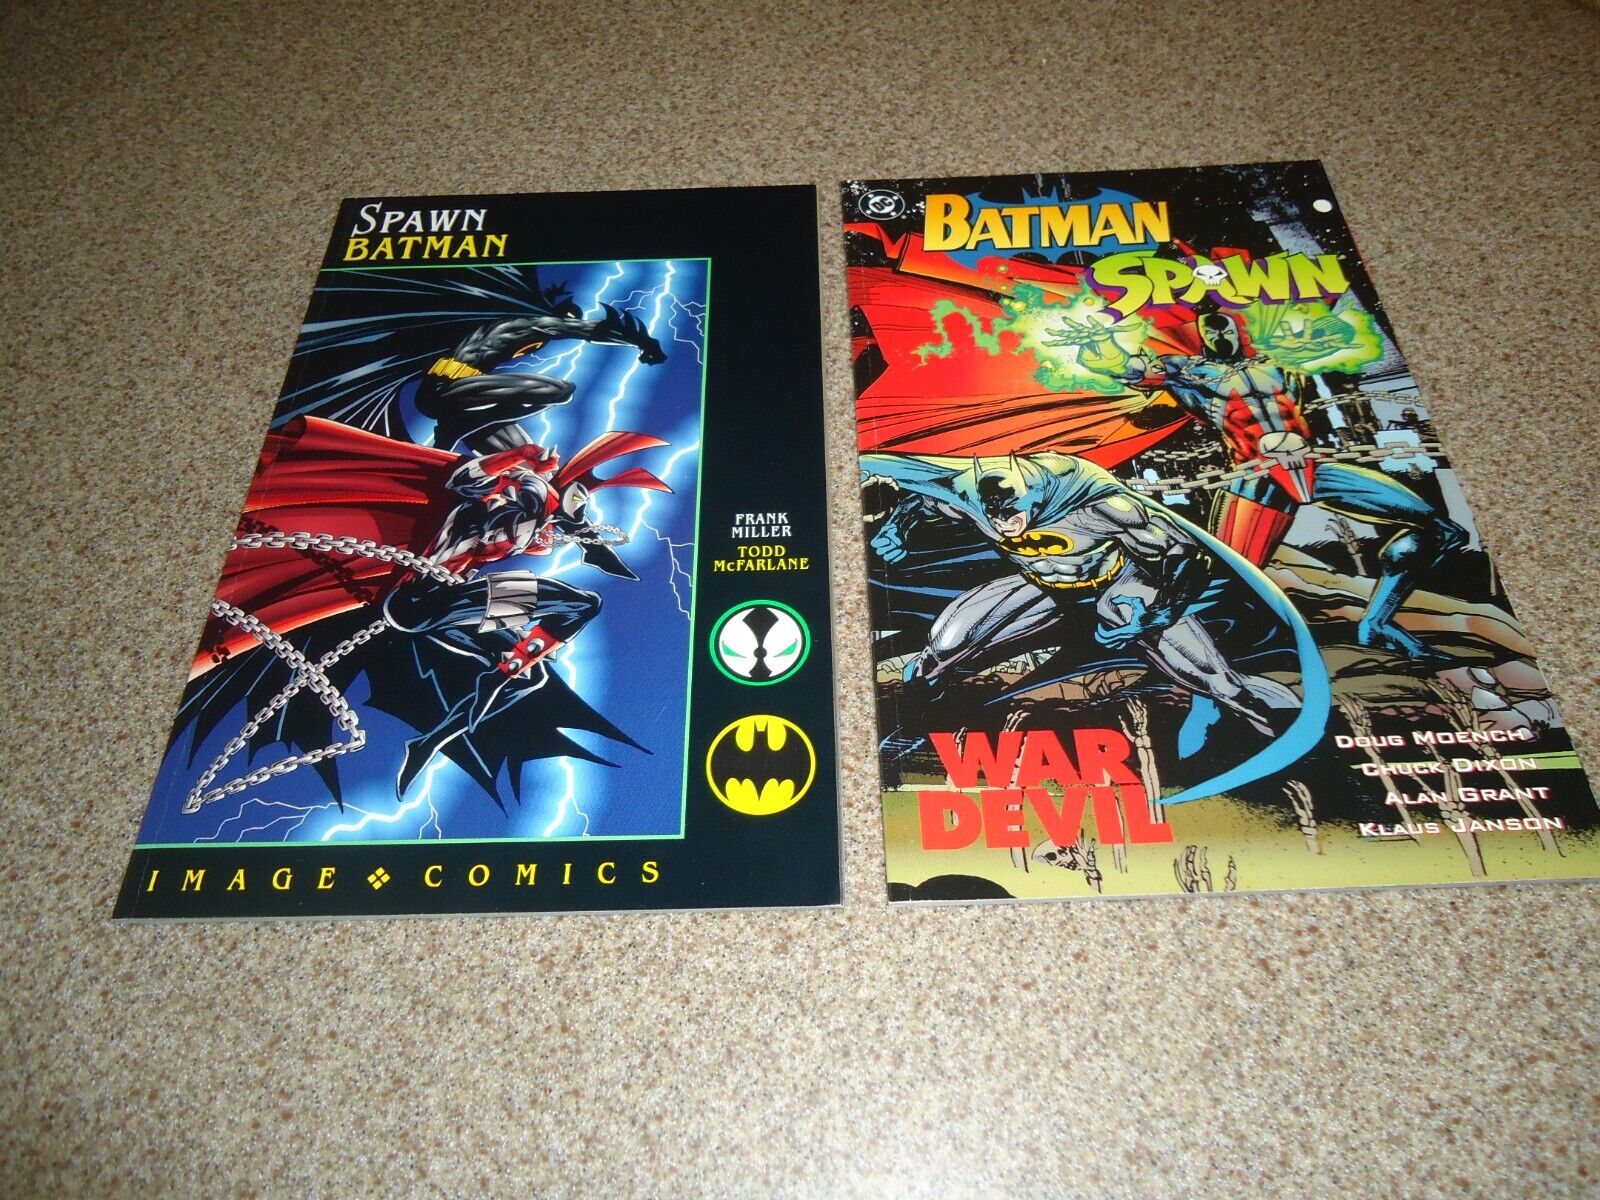 SPAWN BATMAN / BATMAN SPAWN BOTH BOOKS